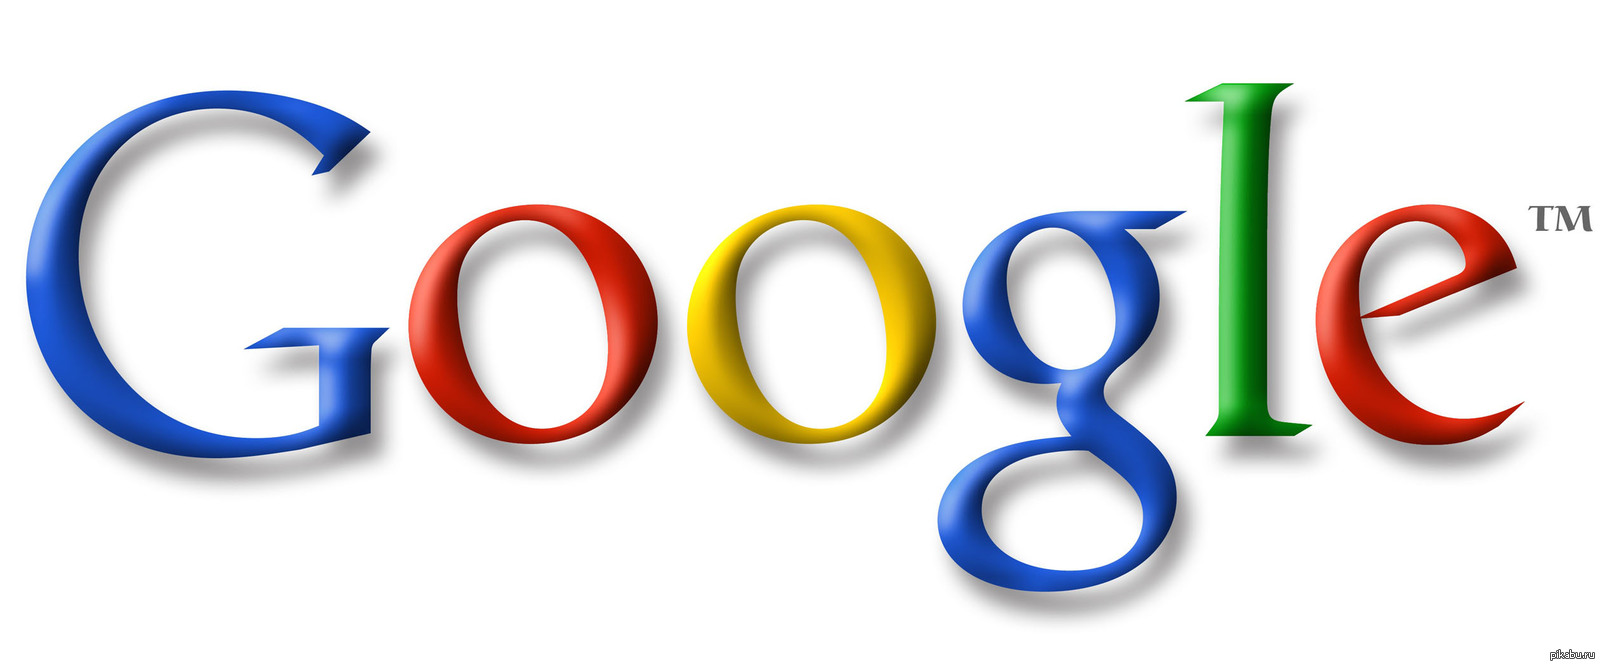 Ooget com. Гугл. Гугл лого. Логотипы поисковых систем. Гугл Академия логотип.